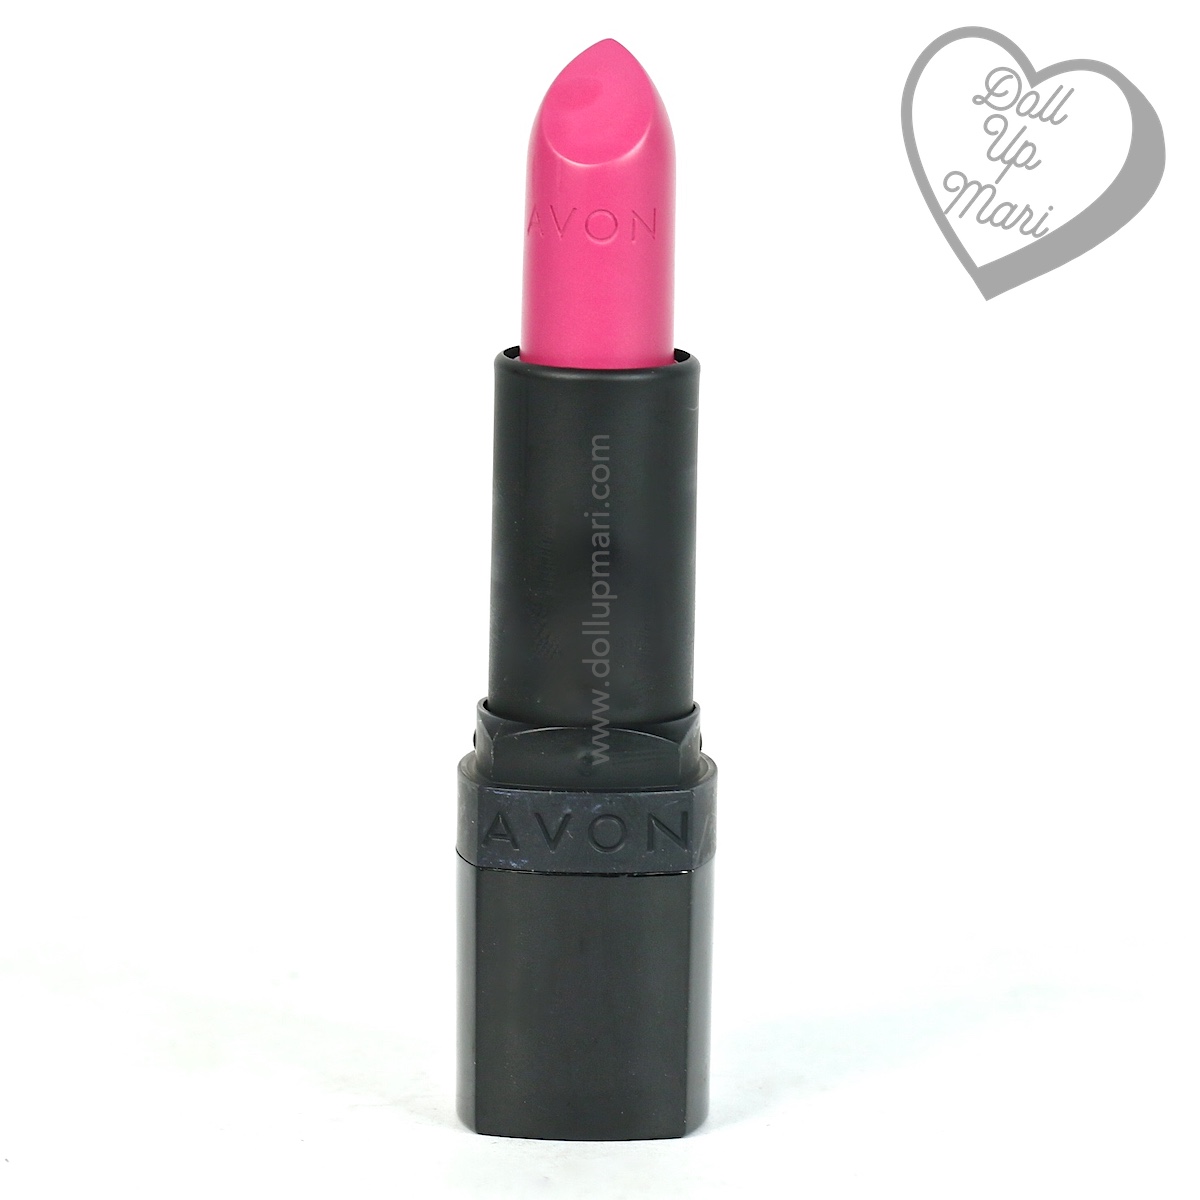 Pack shot of Splendidly Fuchsia shade of AVON Perfectly Matte Lipstick